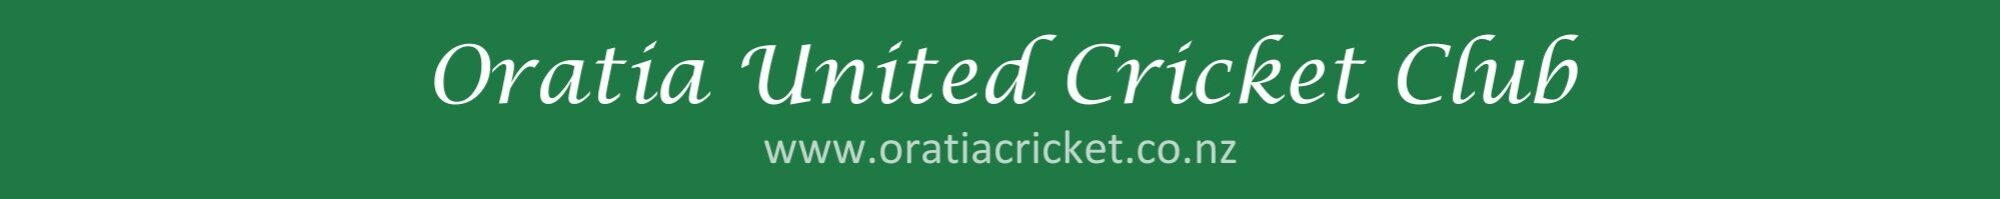 Oratia United Cricket Club